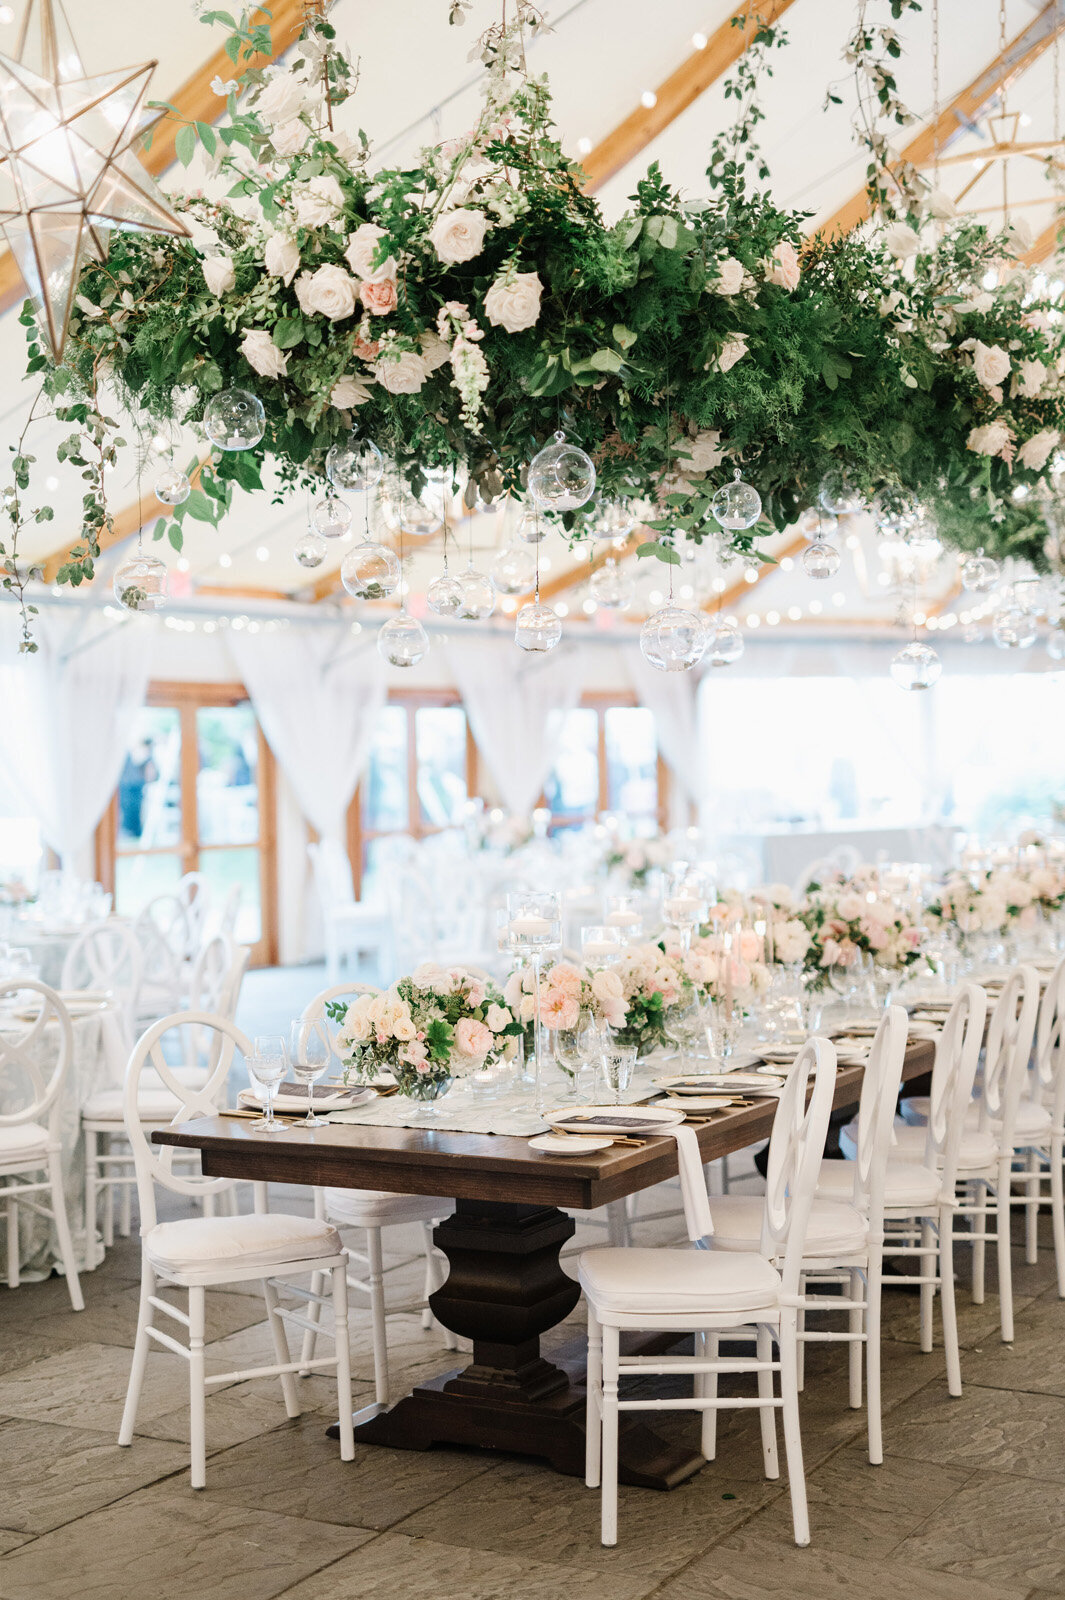 Kate-Murtaugh-Events-Newport-RI-Castle-Hill-Inn-floral-centerpiece-wedding-planner-spring-floral-farm-tables-canopy-installation